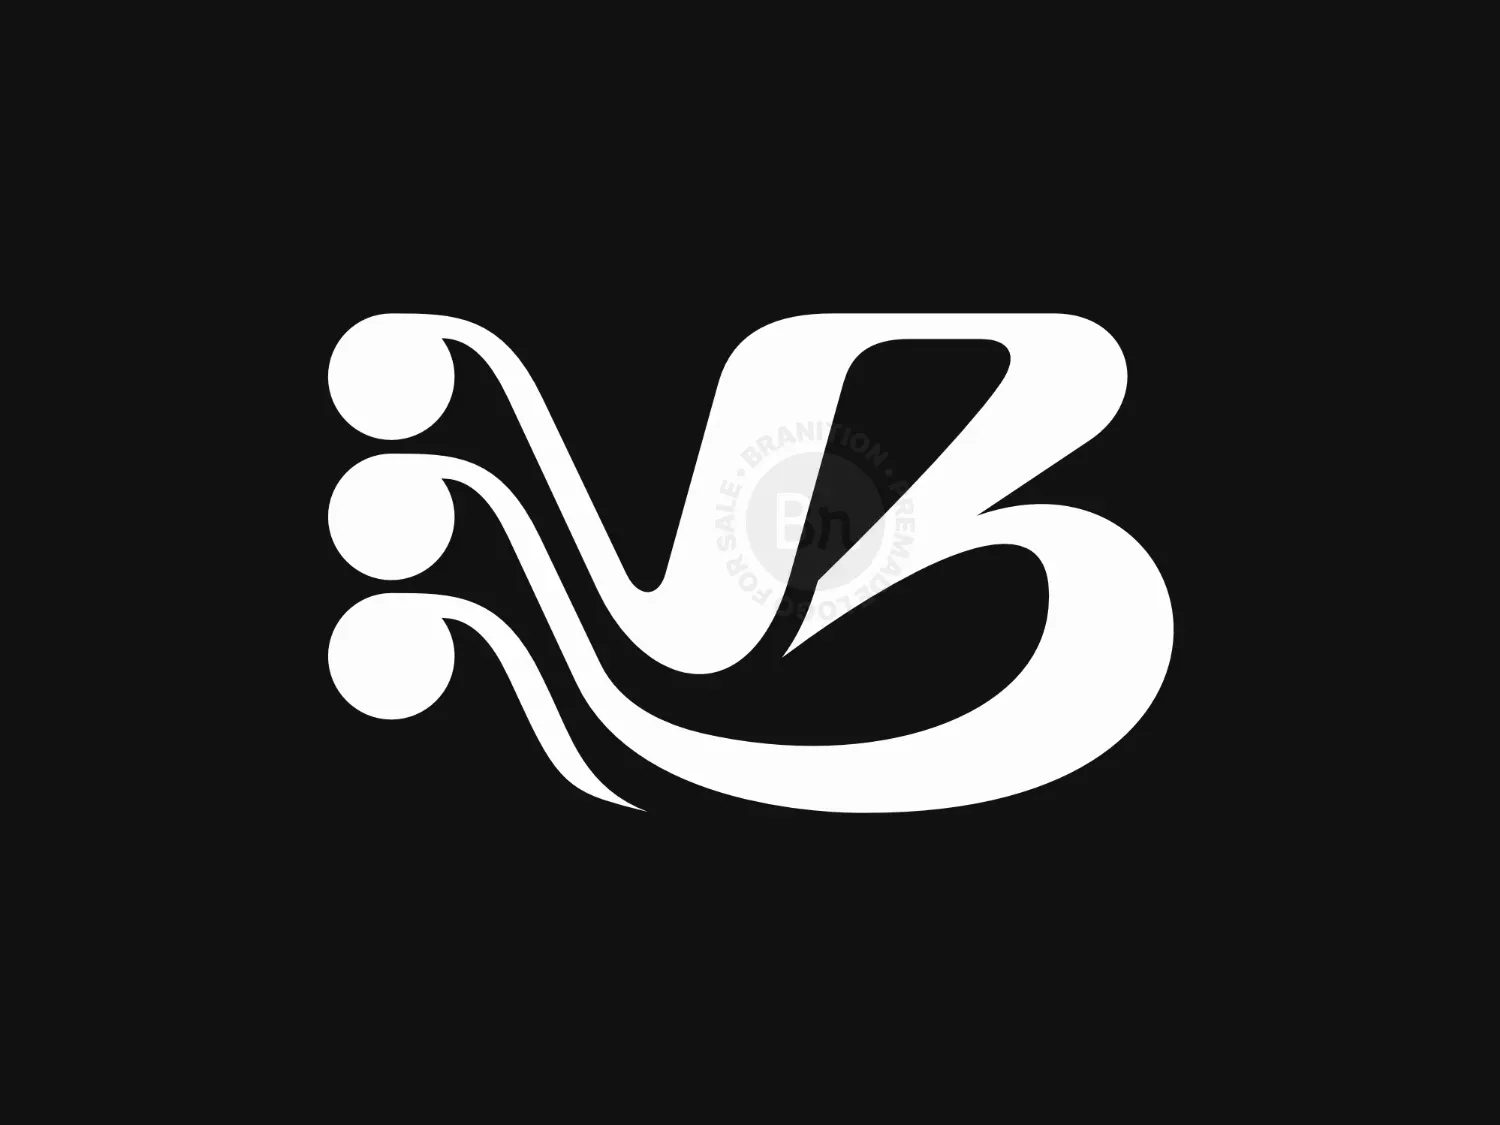 Vb logo Vectors & Illustrations for Free Download | Freepik